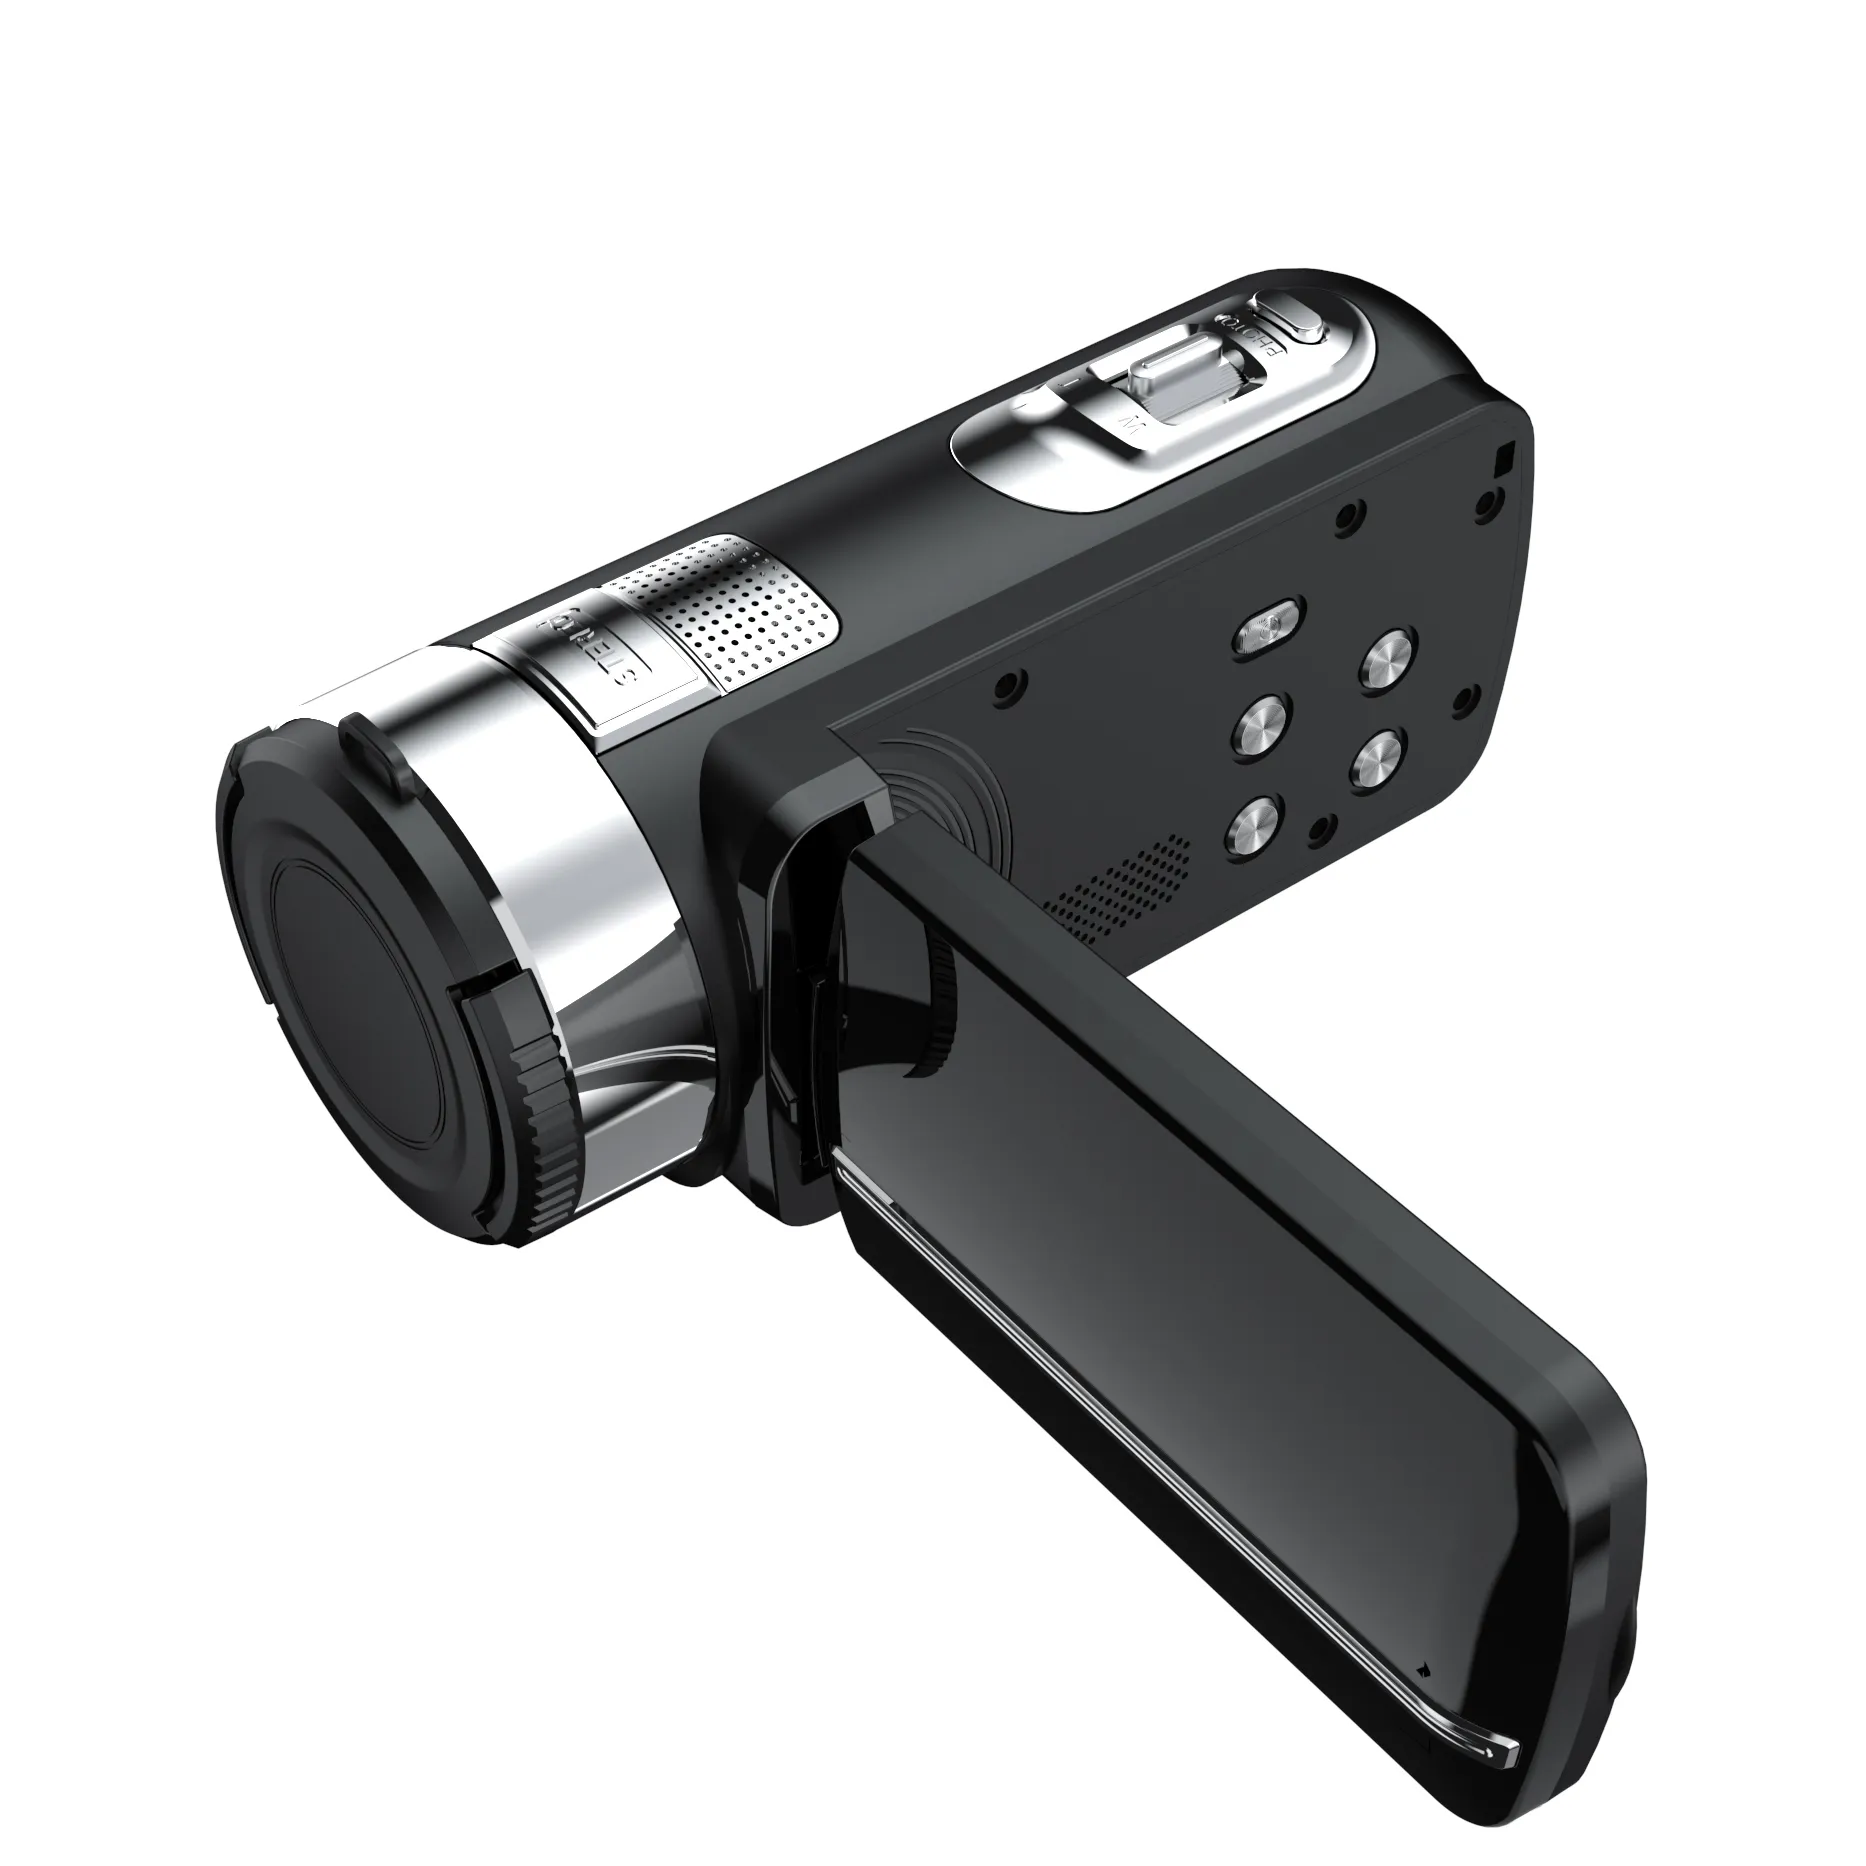 HDKing-cámara de vídeo Digital, videocámara DV02V, Zoom de 48MP, 16X, 3,0 pulgadas, inalámbrica, 4K